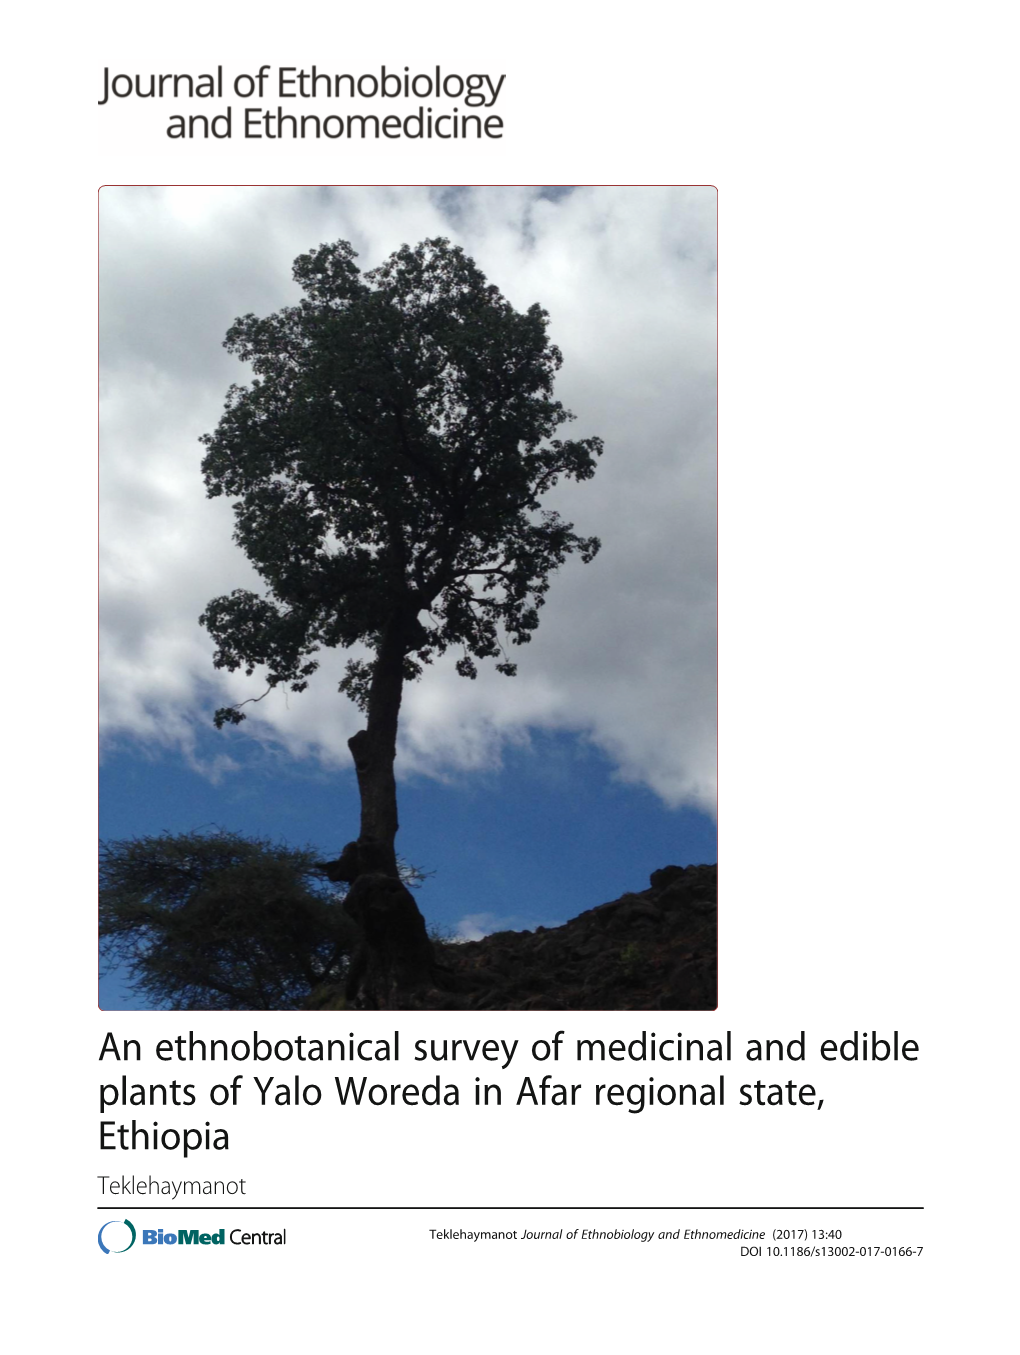 An Ethnobotanical Survey of Medicinal and Edible Plants of Yalo Woreda in Afar Regional State, Ethiopia Teklehaymanot